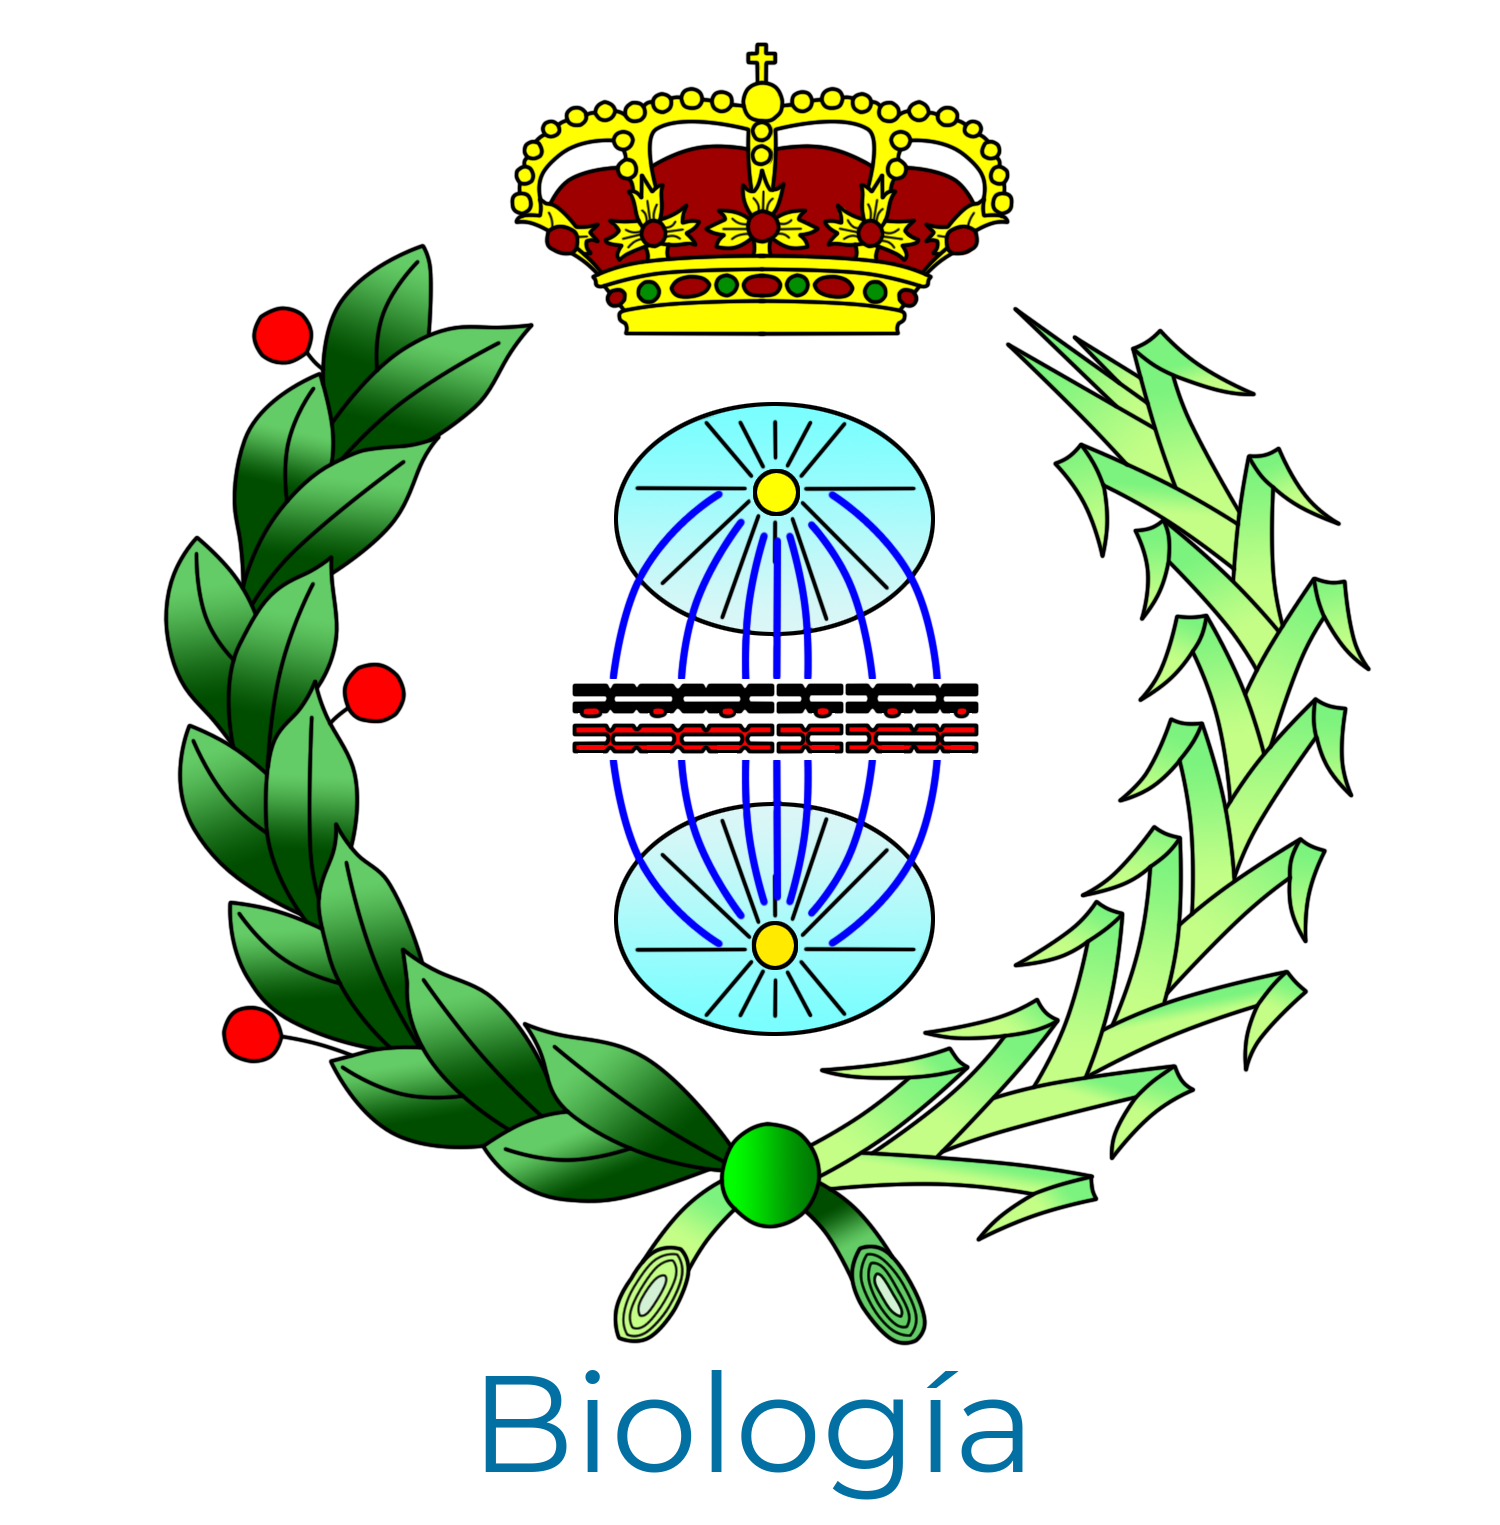 Biologia logo